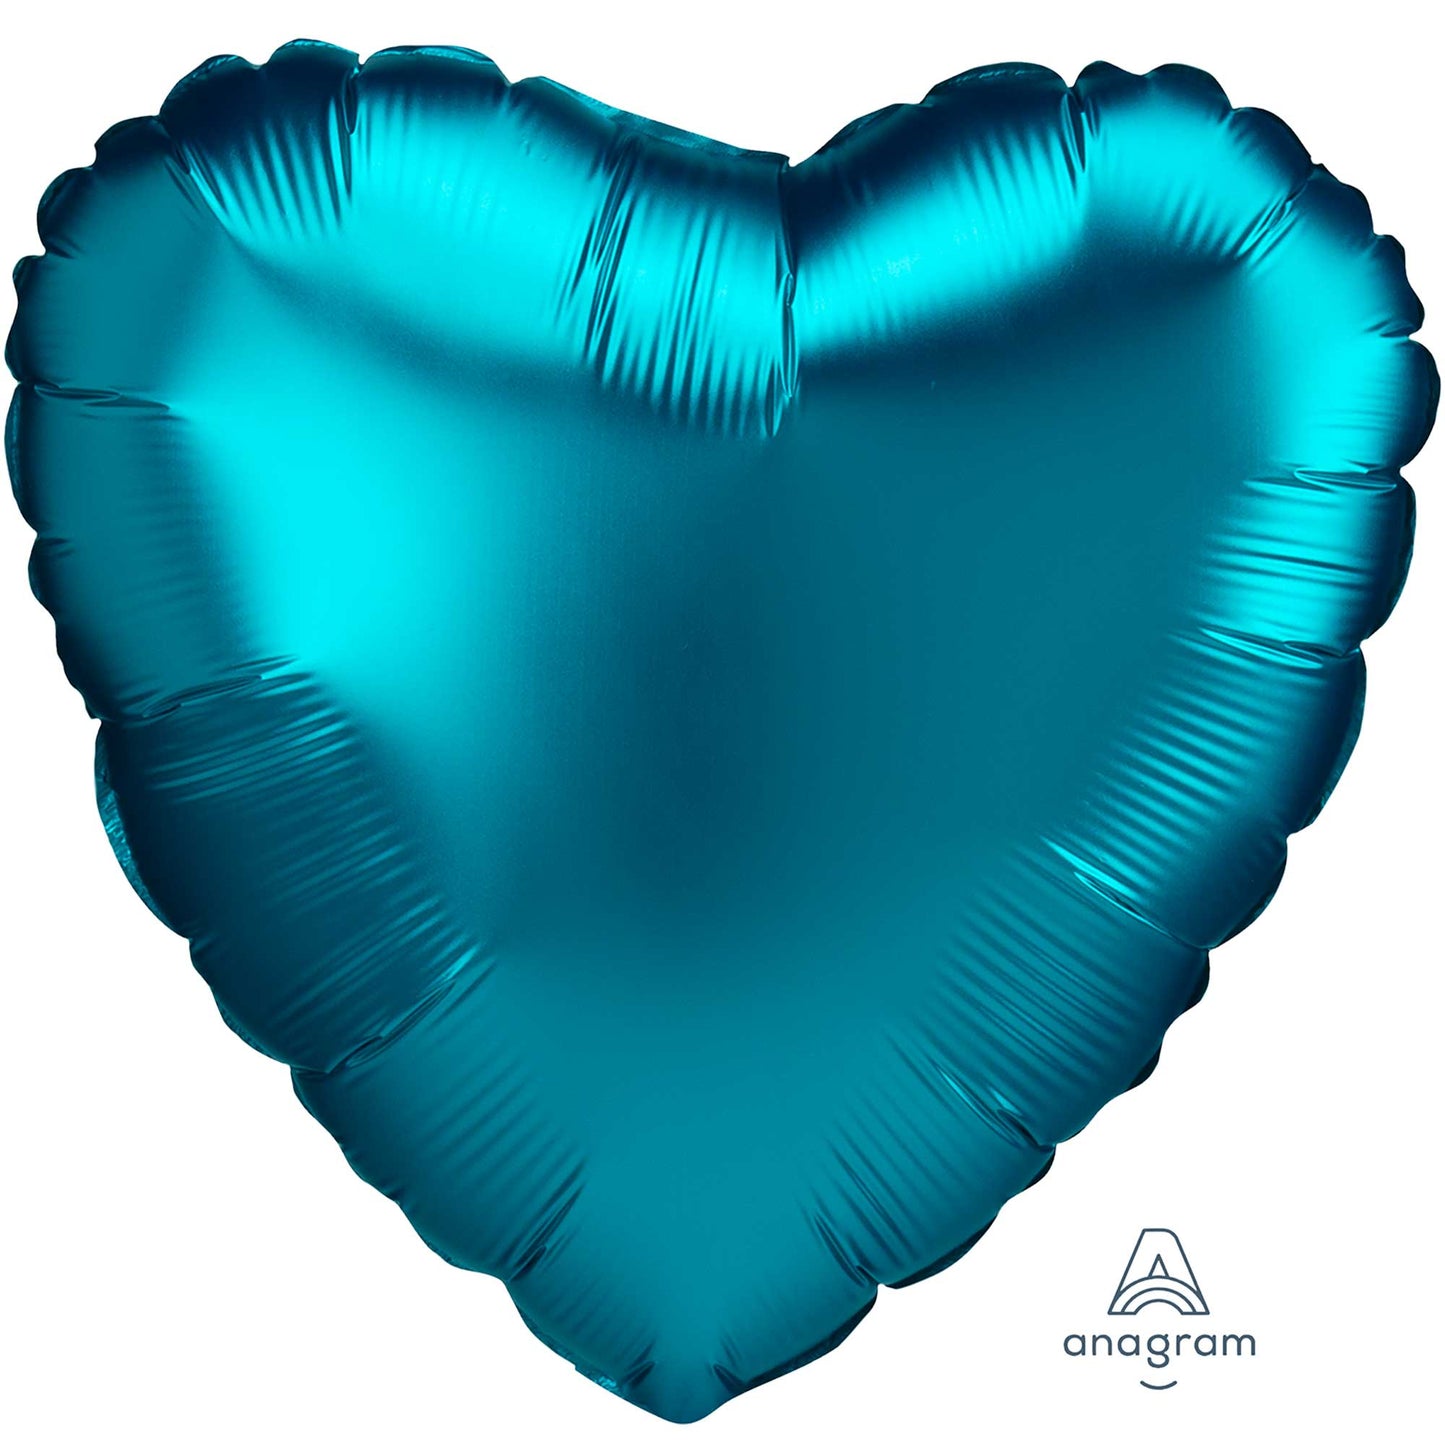 45cm Standard HX Satin Luxe Aqua Heart S18